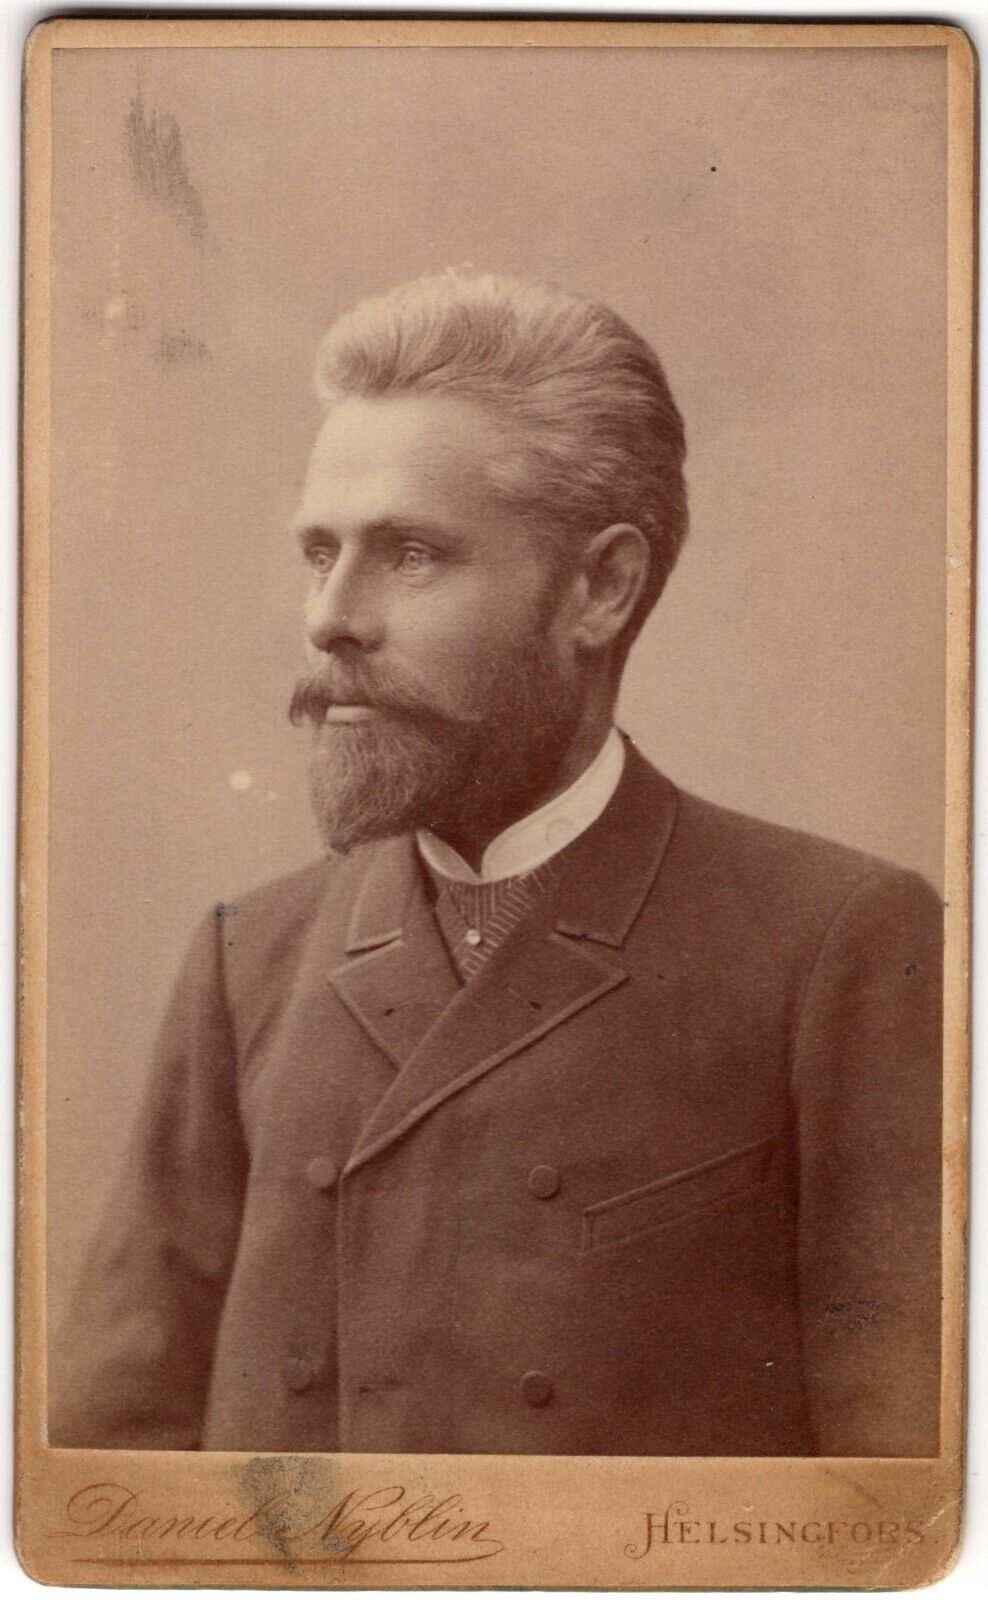 CIRCA 1890s CDV DANIEL NYBLIN HANDSOME BEARDED MAN IN SUIT HELSINGFORS FINLAND